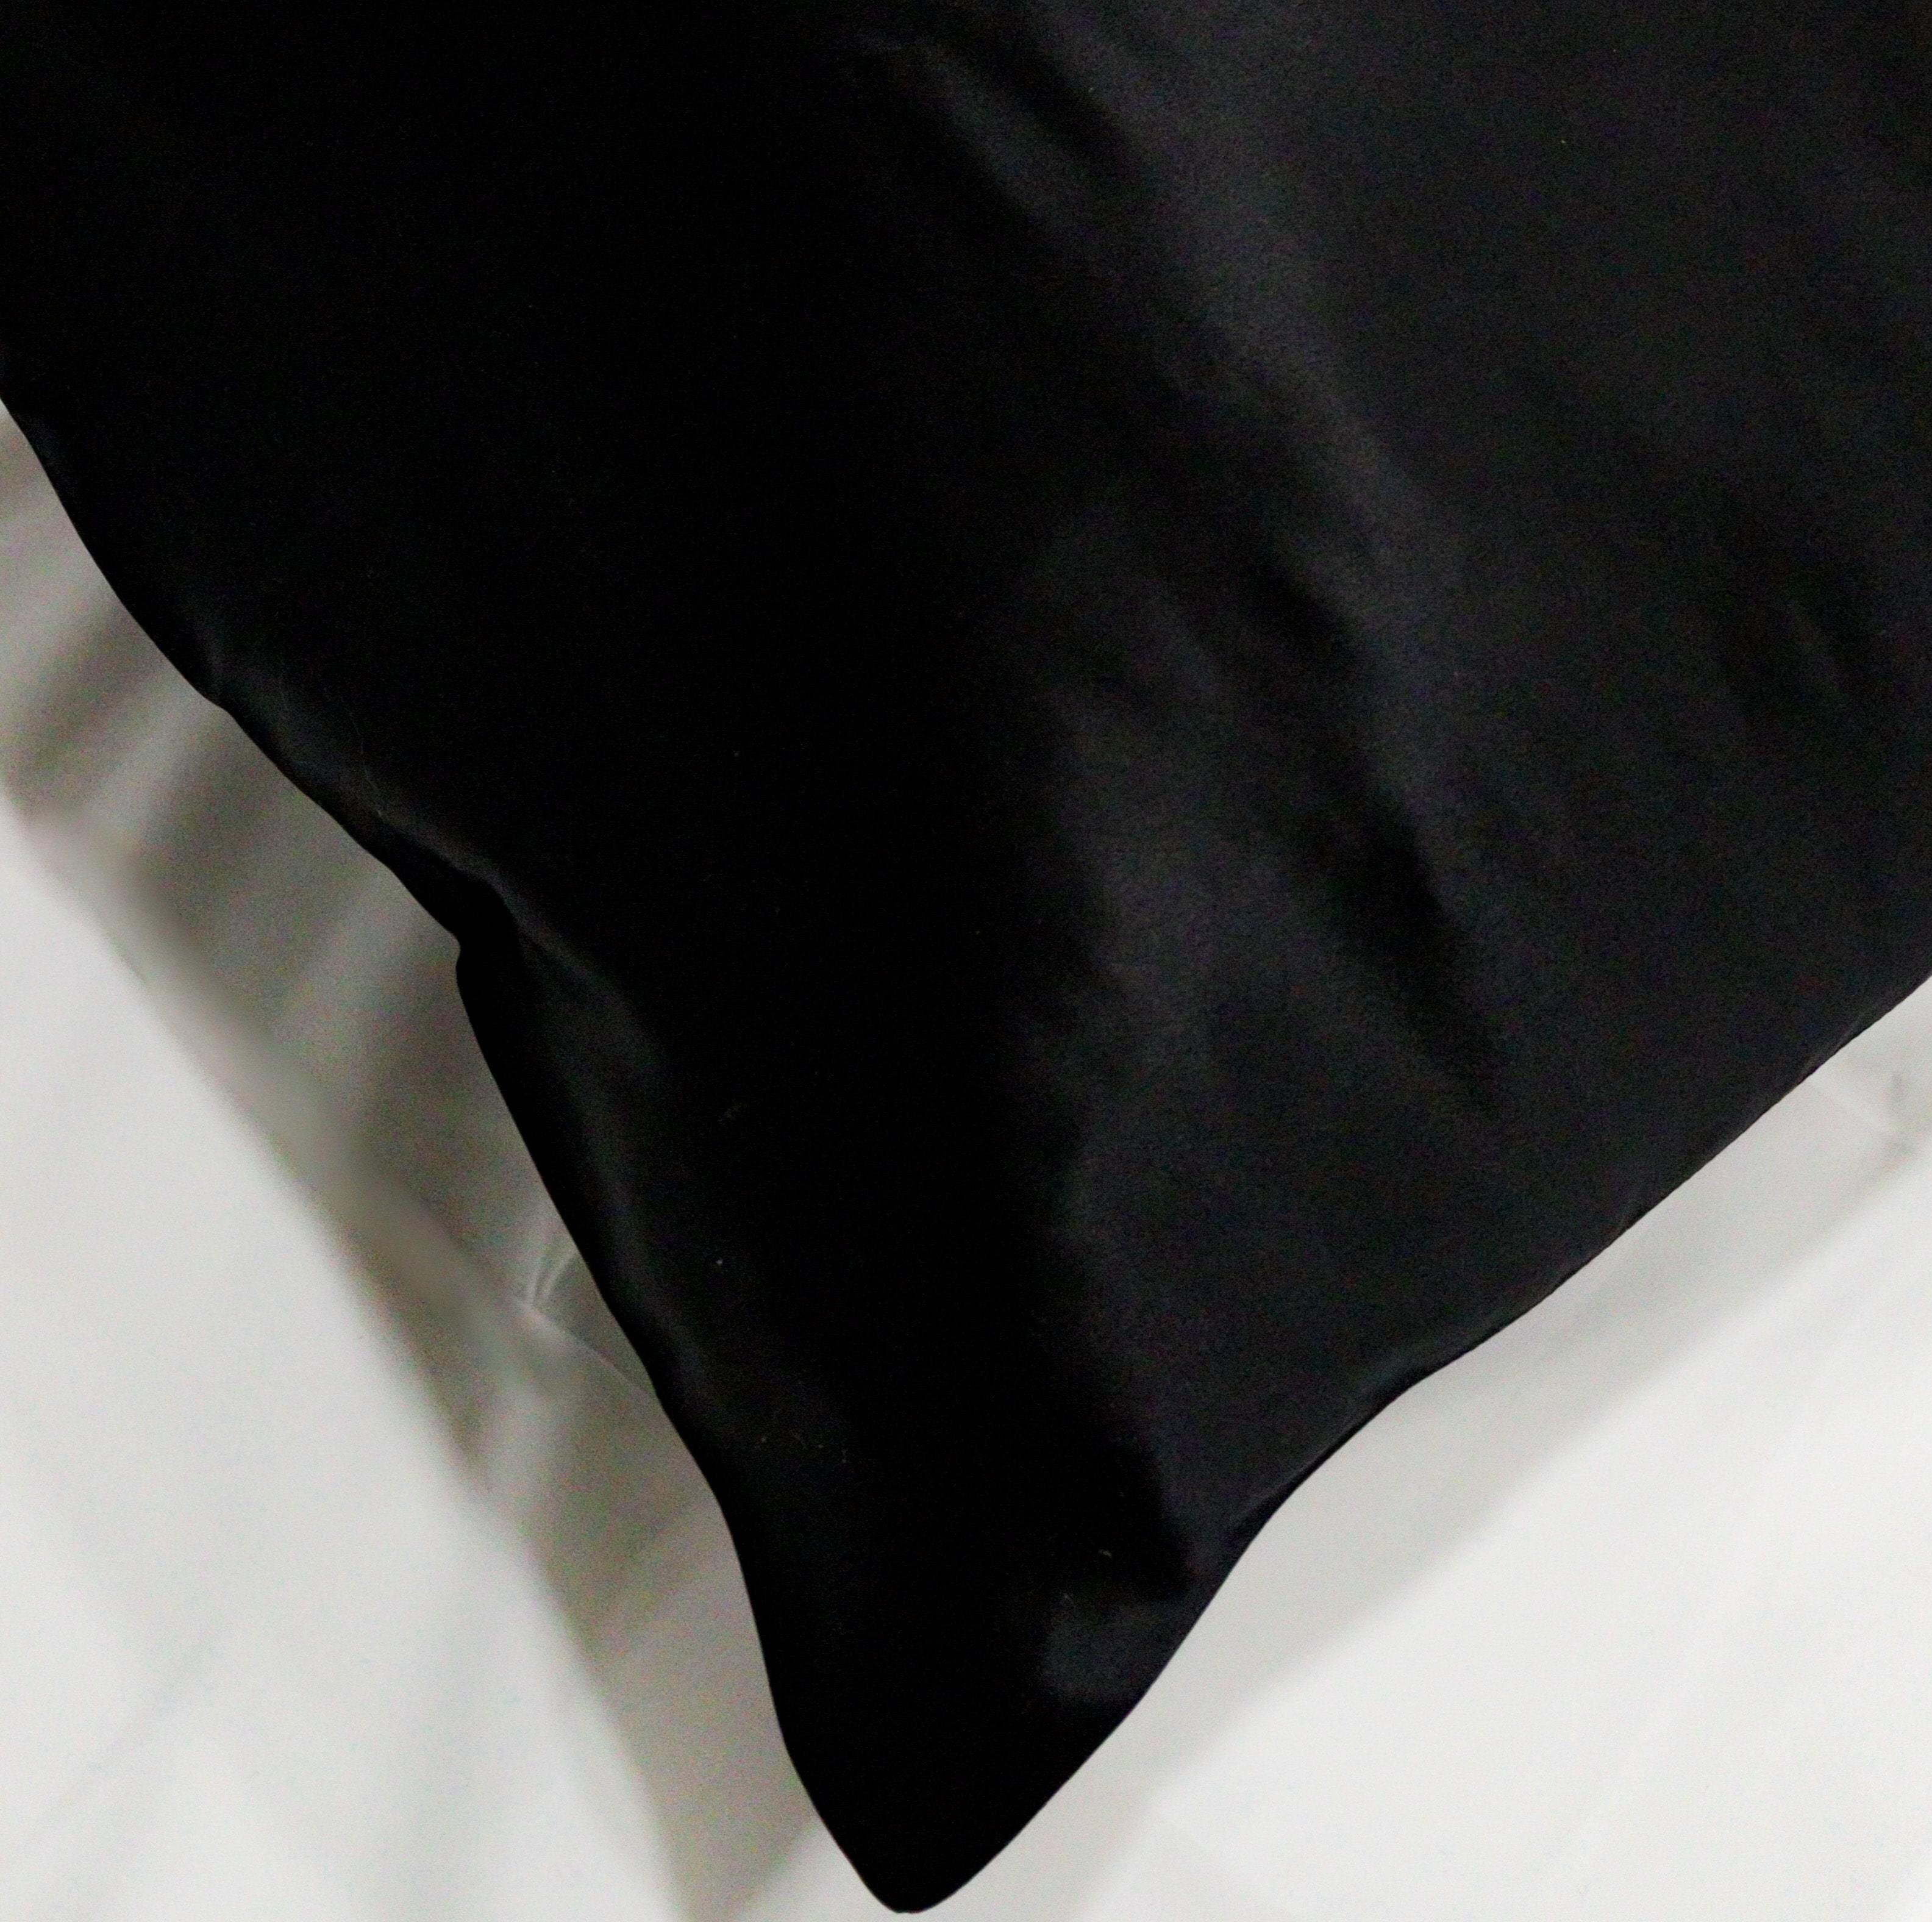 Silk Pillowcase Dreamswithus Premium Black